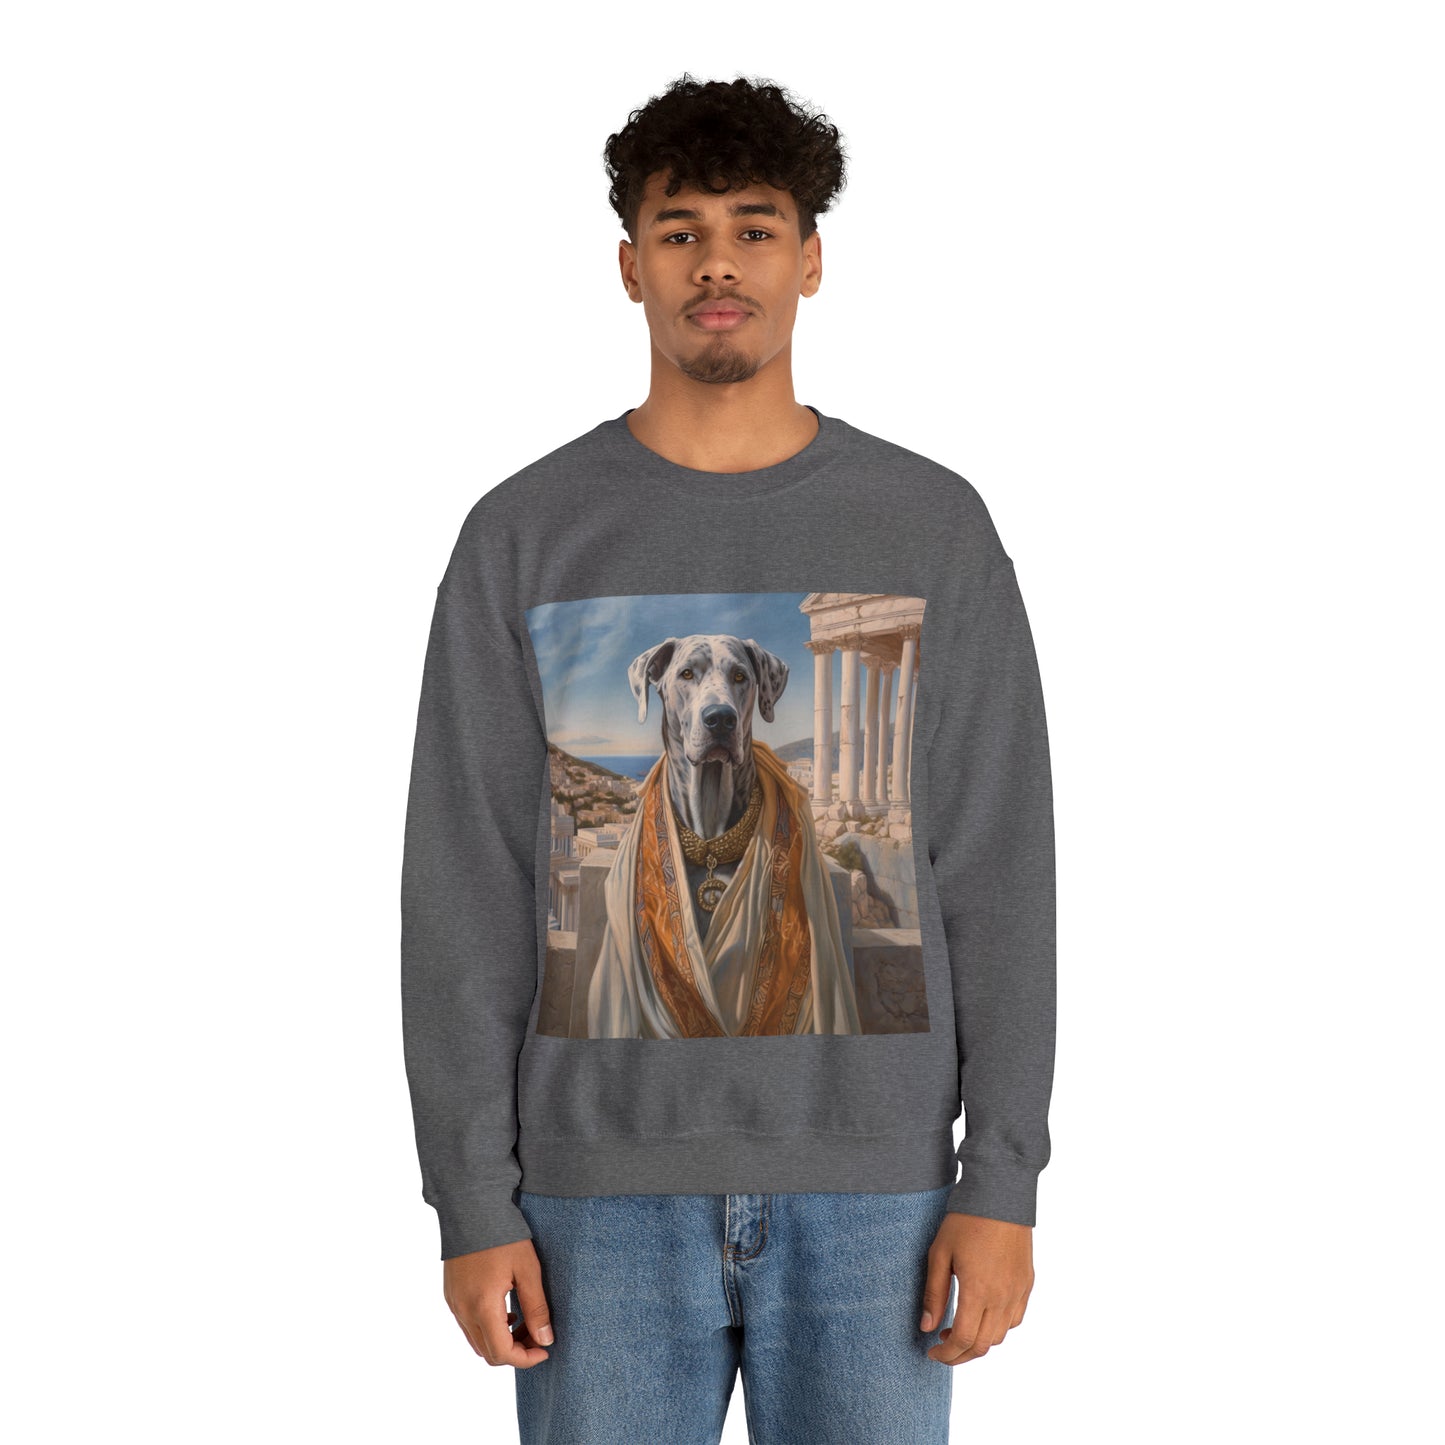 Great Dane - Ancient Greek Philosopher - Pet Portrait Unisex Crewneck Sweatshirt